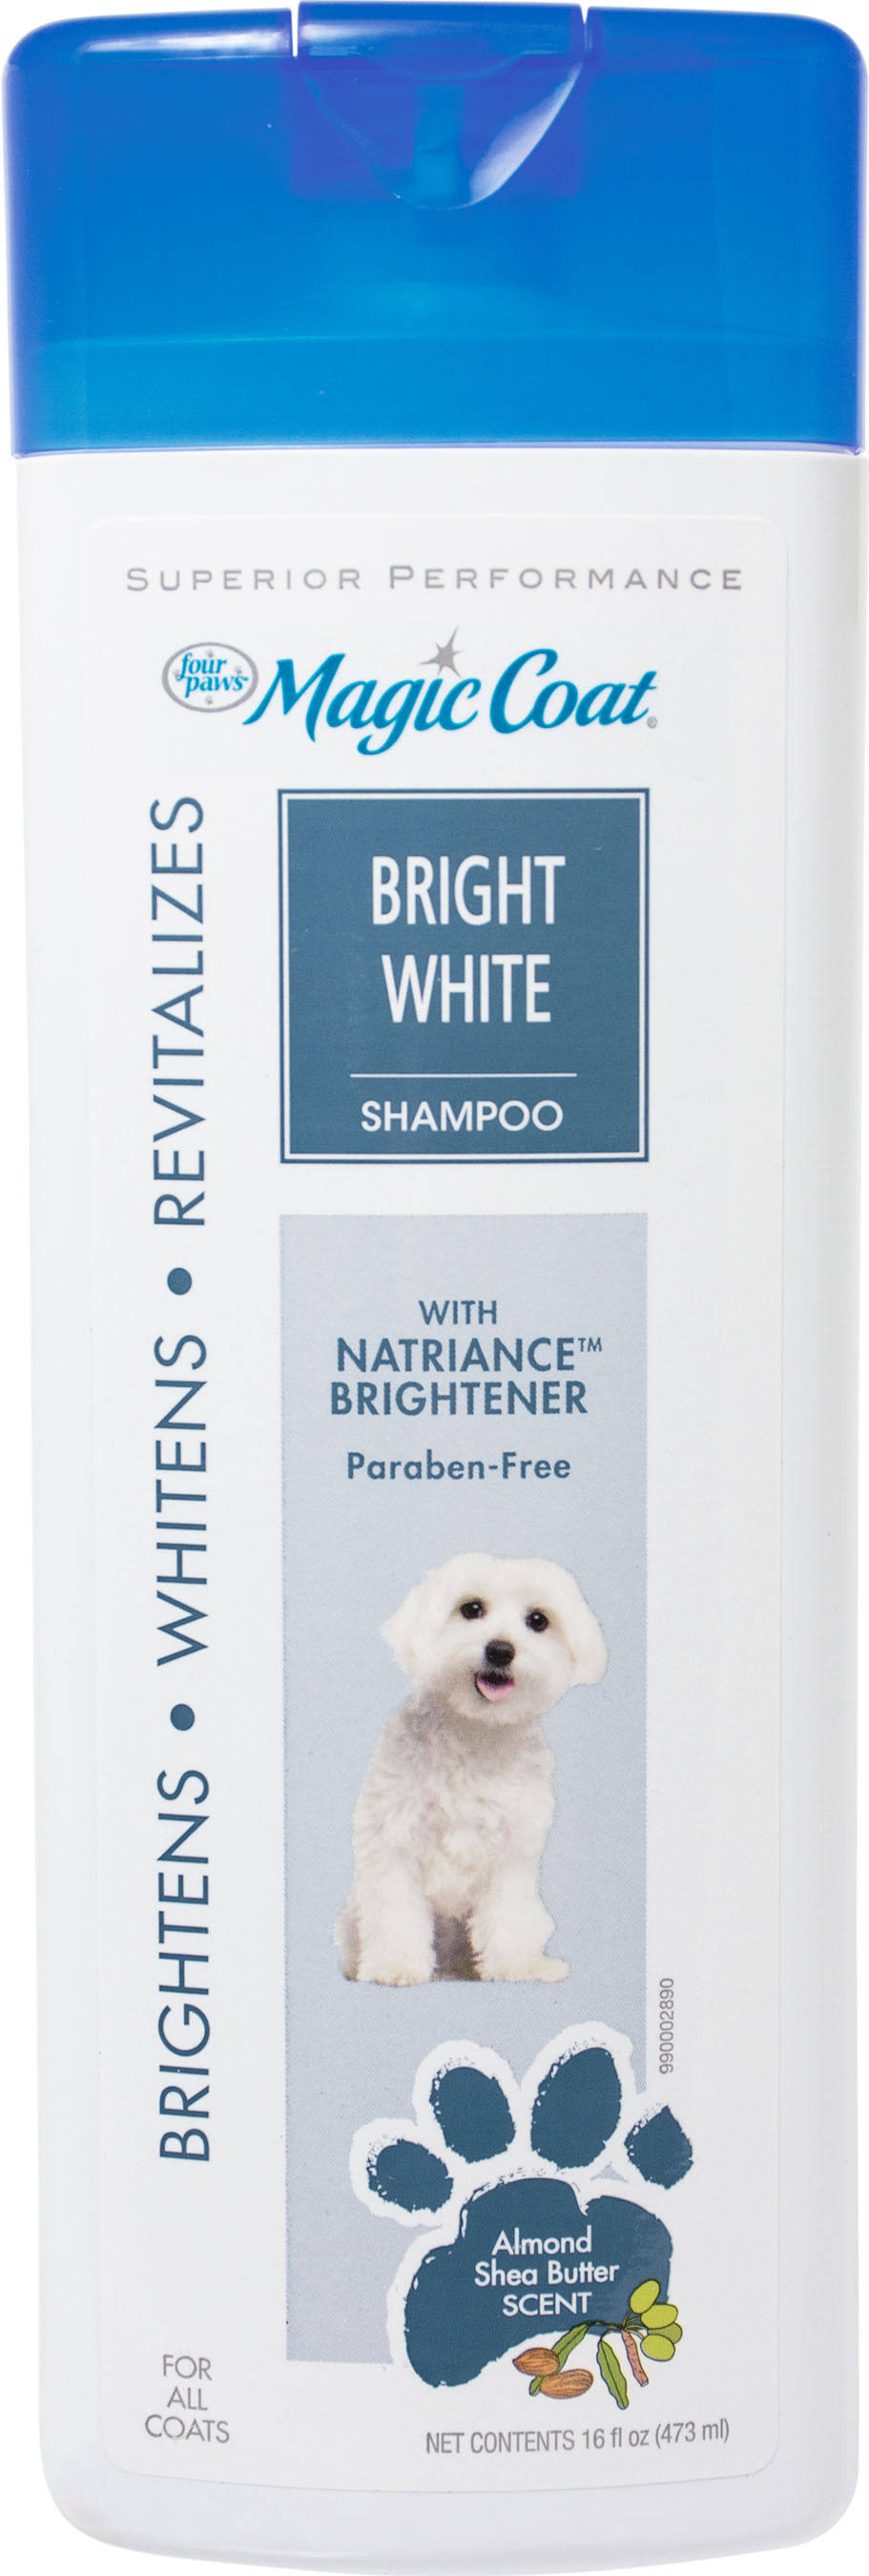 Four Paws Magic Coat Dog Grooming Shampoo - Bright White